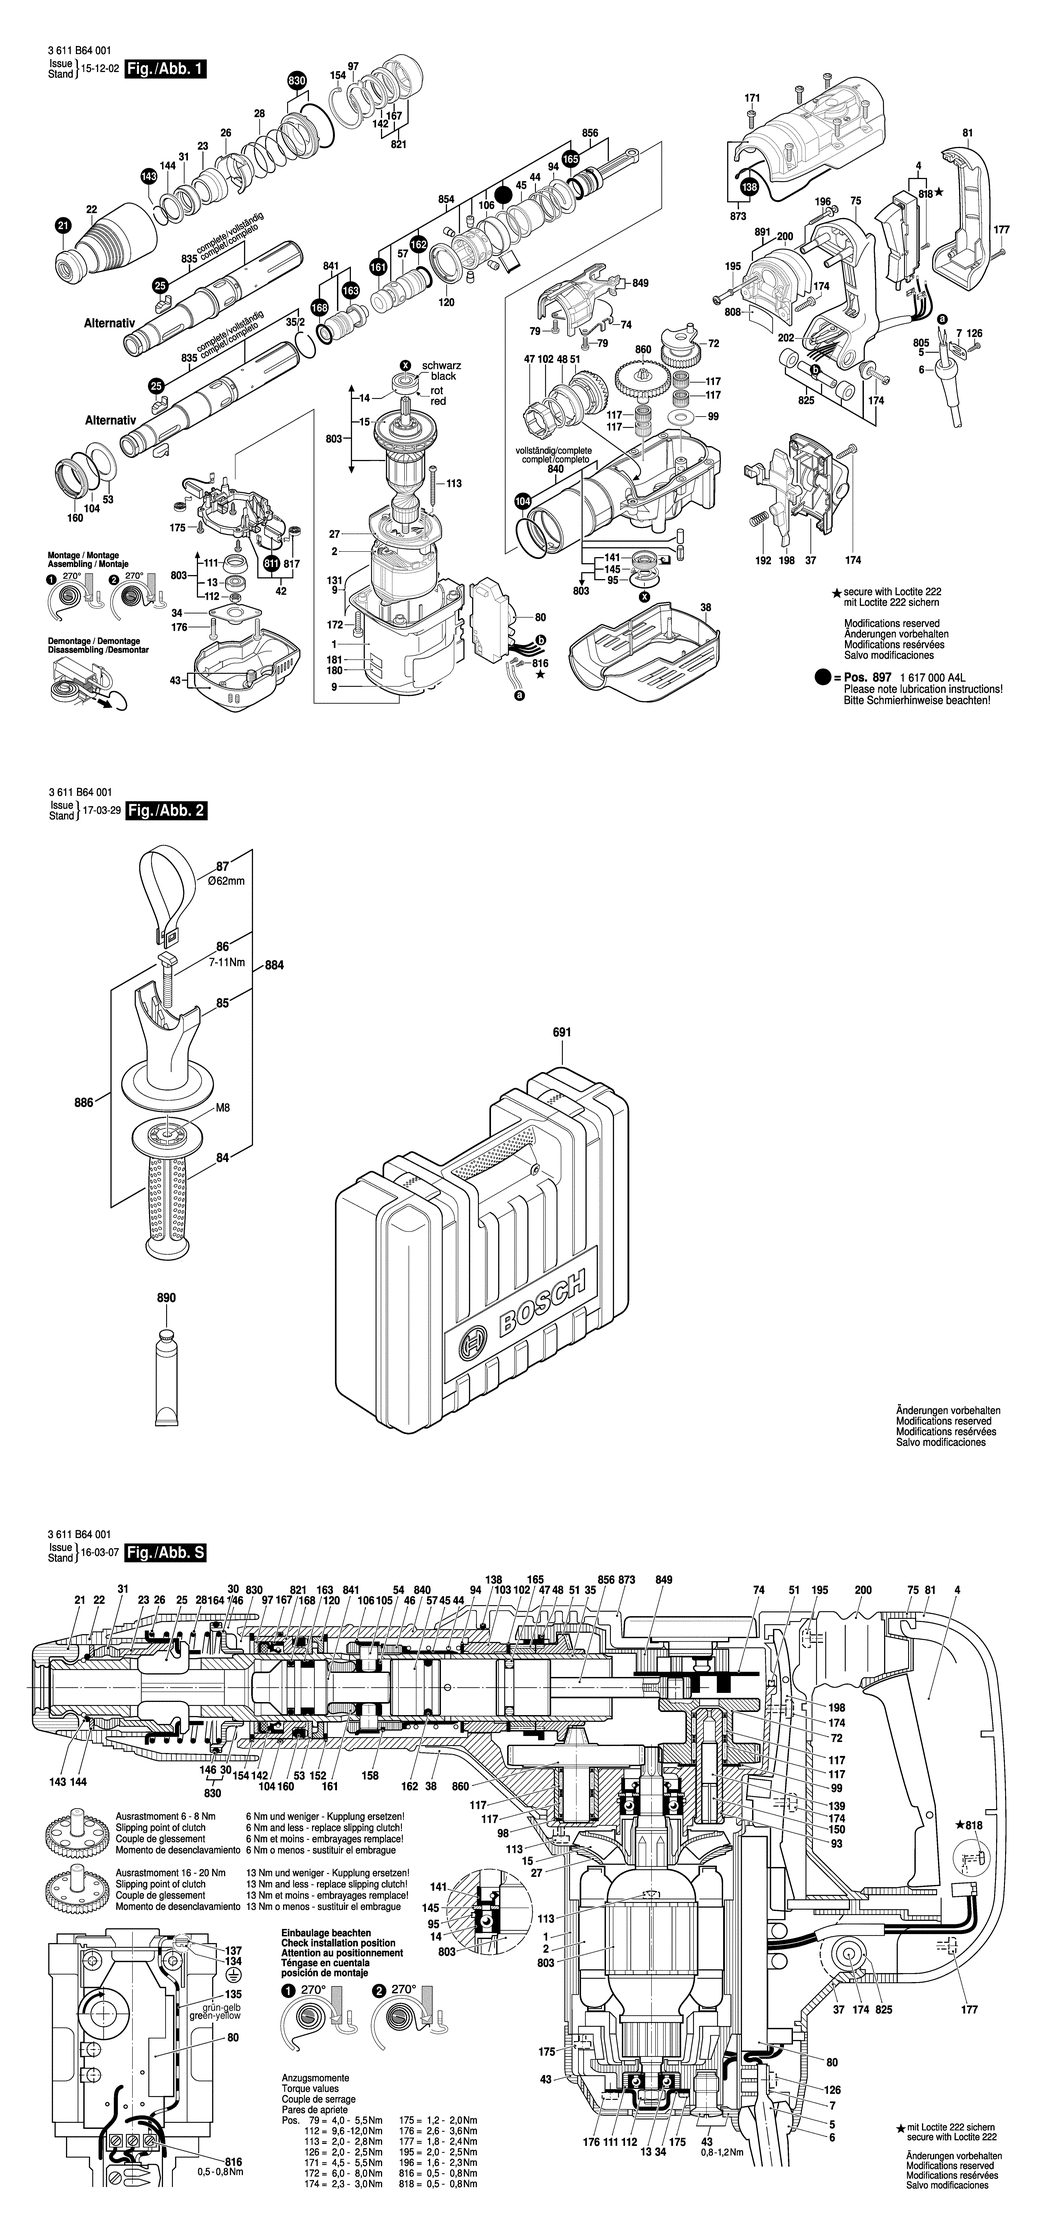 Bosch GBH 5-40 DCE / 3611B64071 / GB 230 Volt Spare Parts